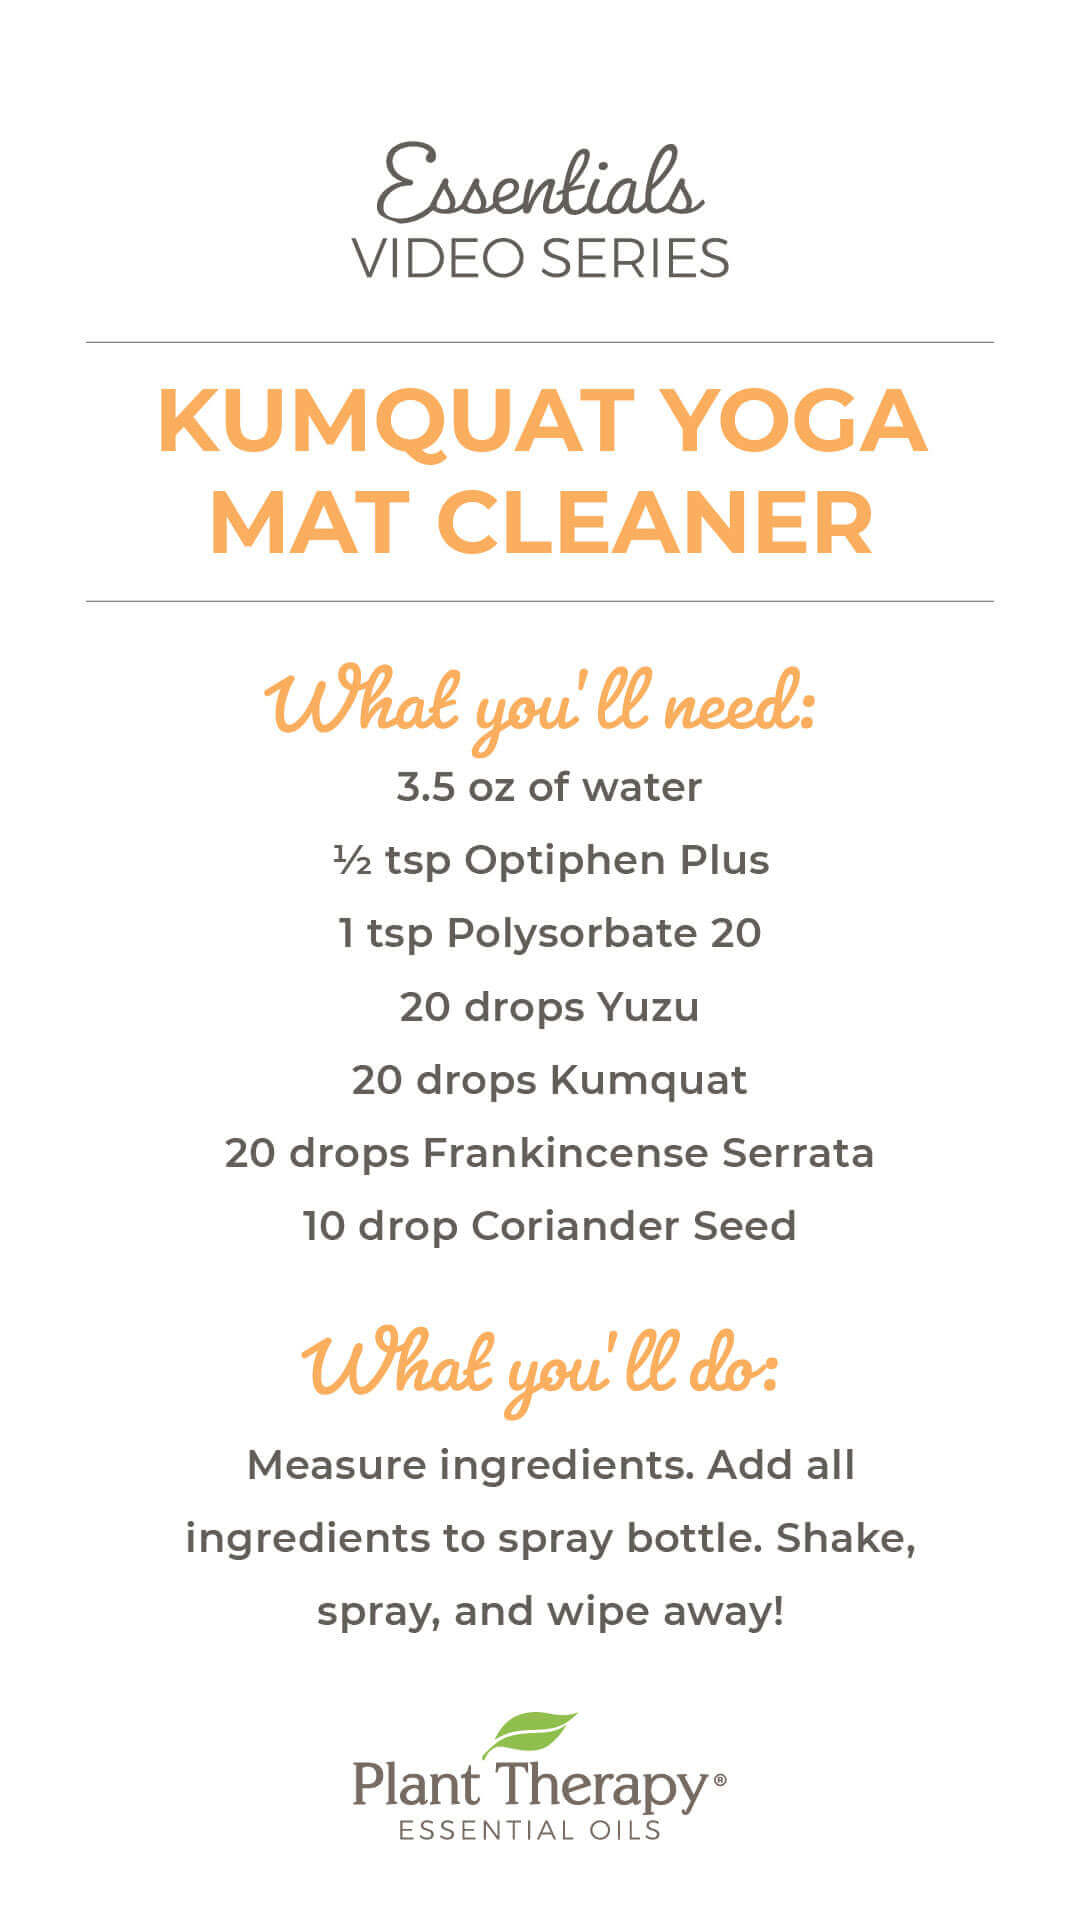 Kumquat Yoga Mat Cleaner